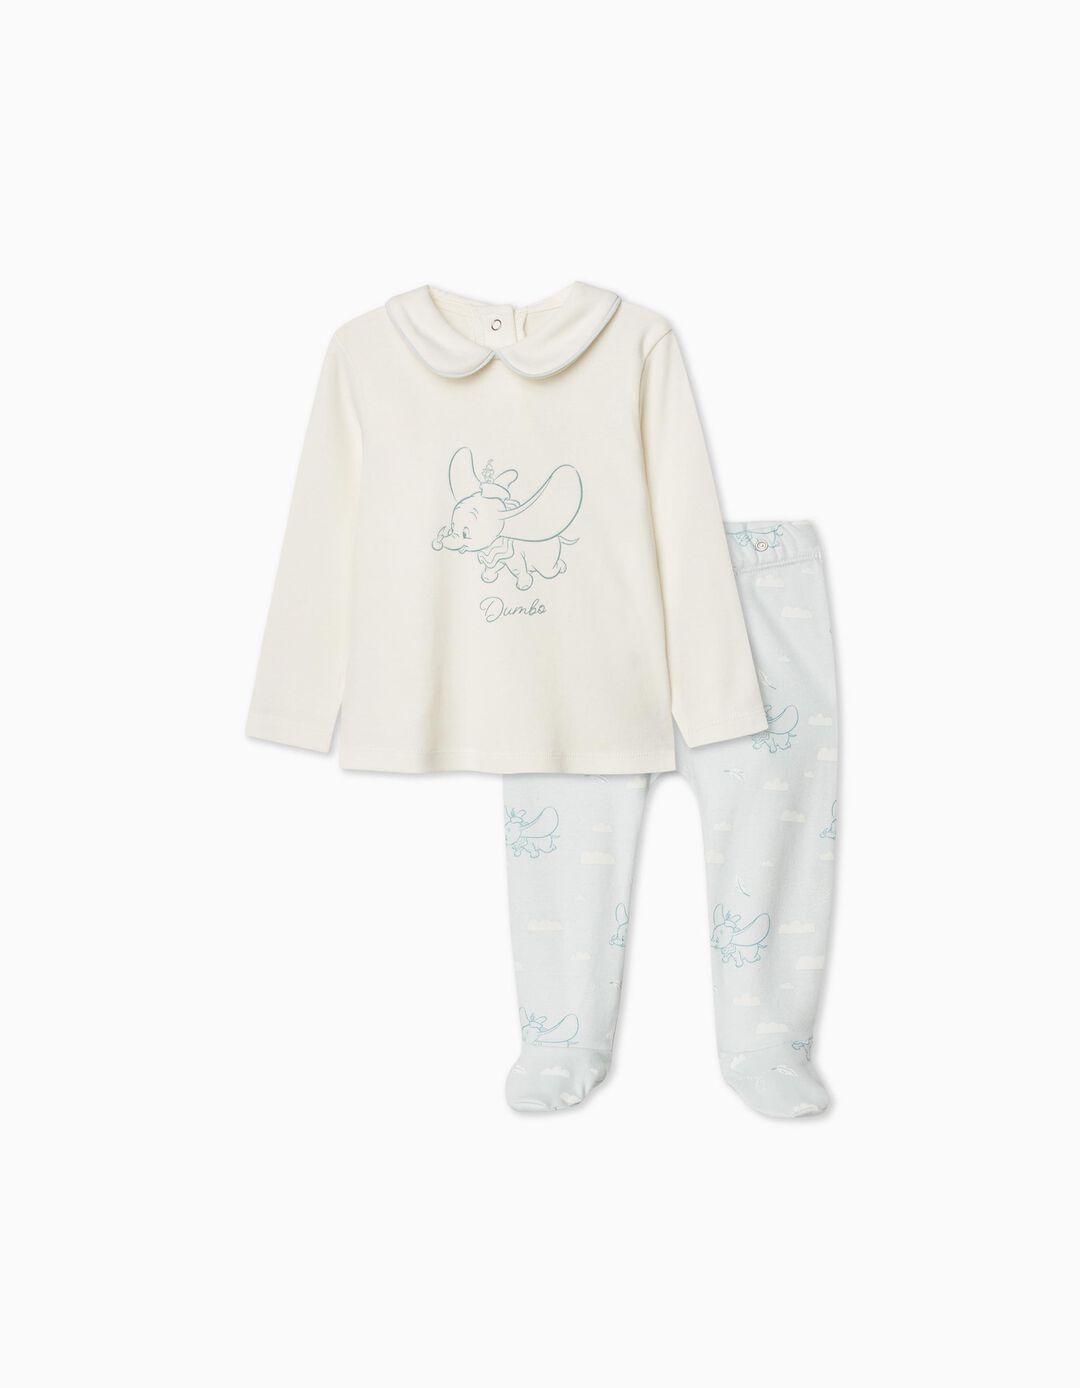 'Disney' pajamas, Baby Boy, Multiple colors